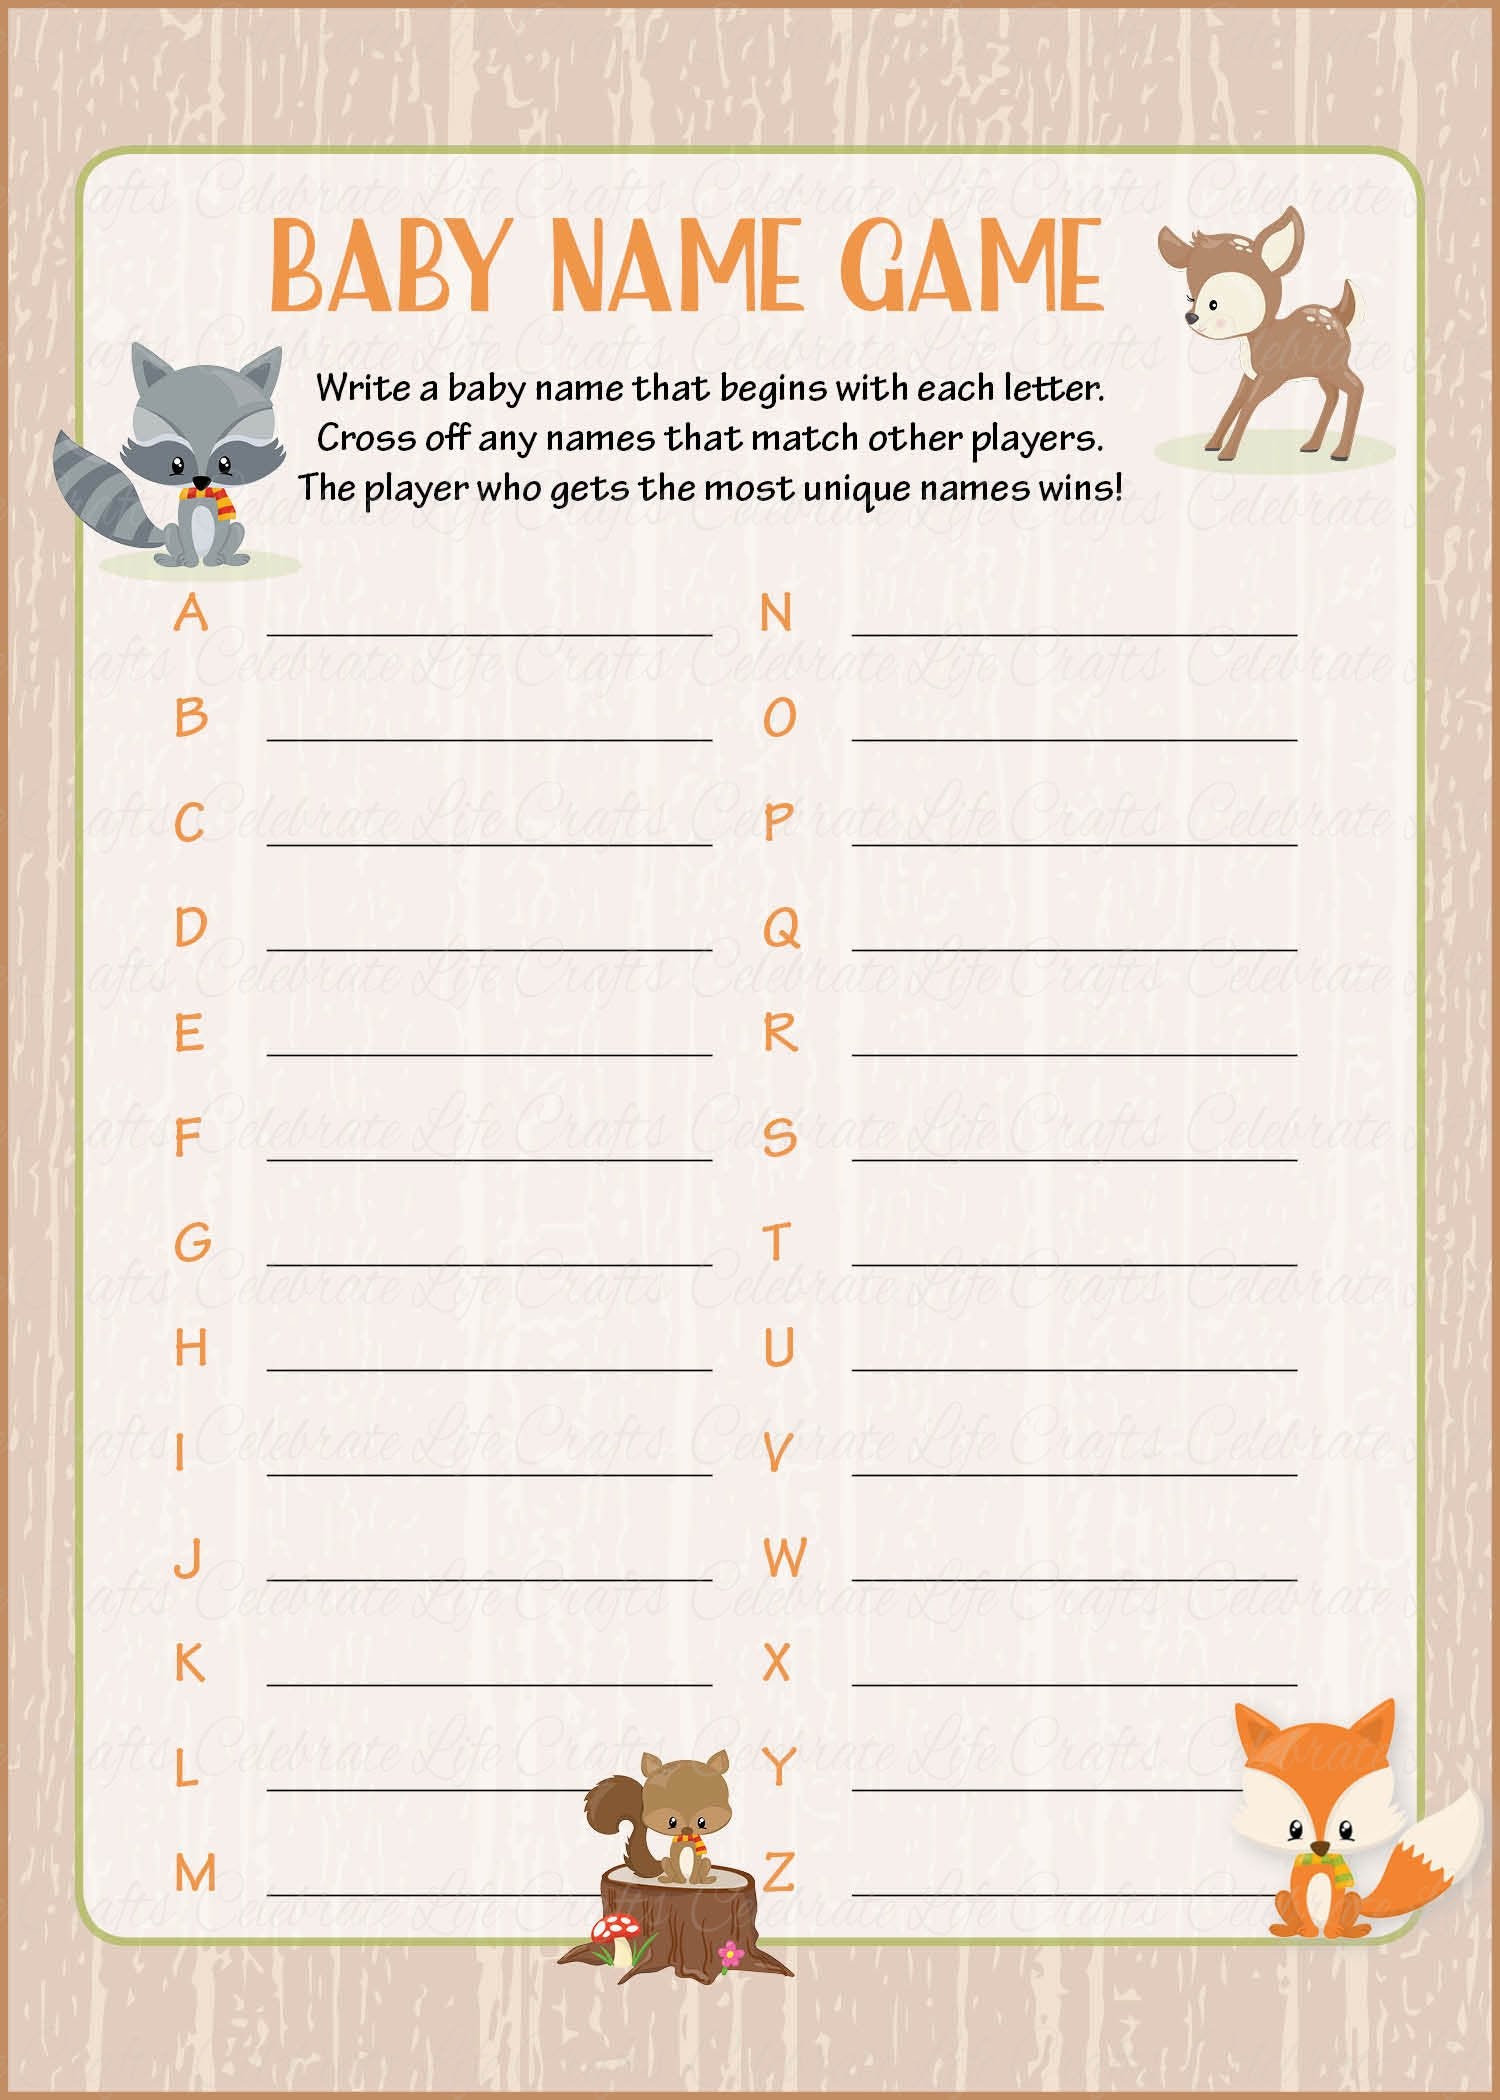 Name the Baby Animal, Woodland Theme Baby Shower Games Printable